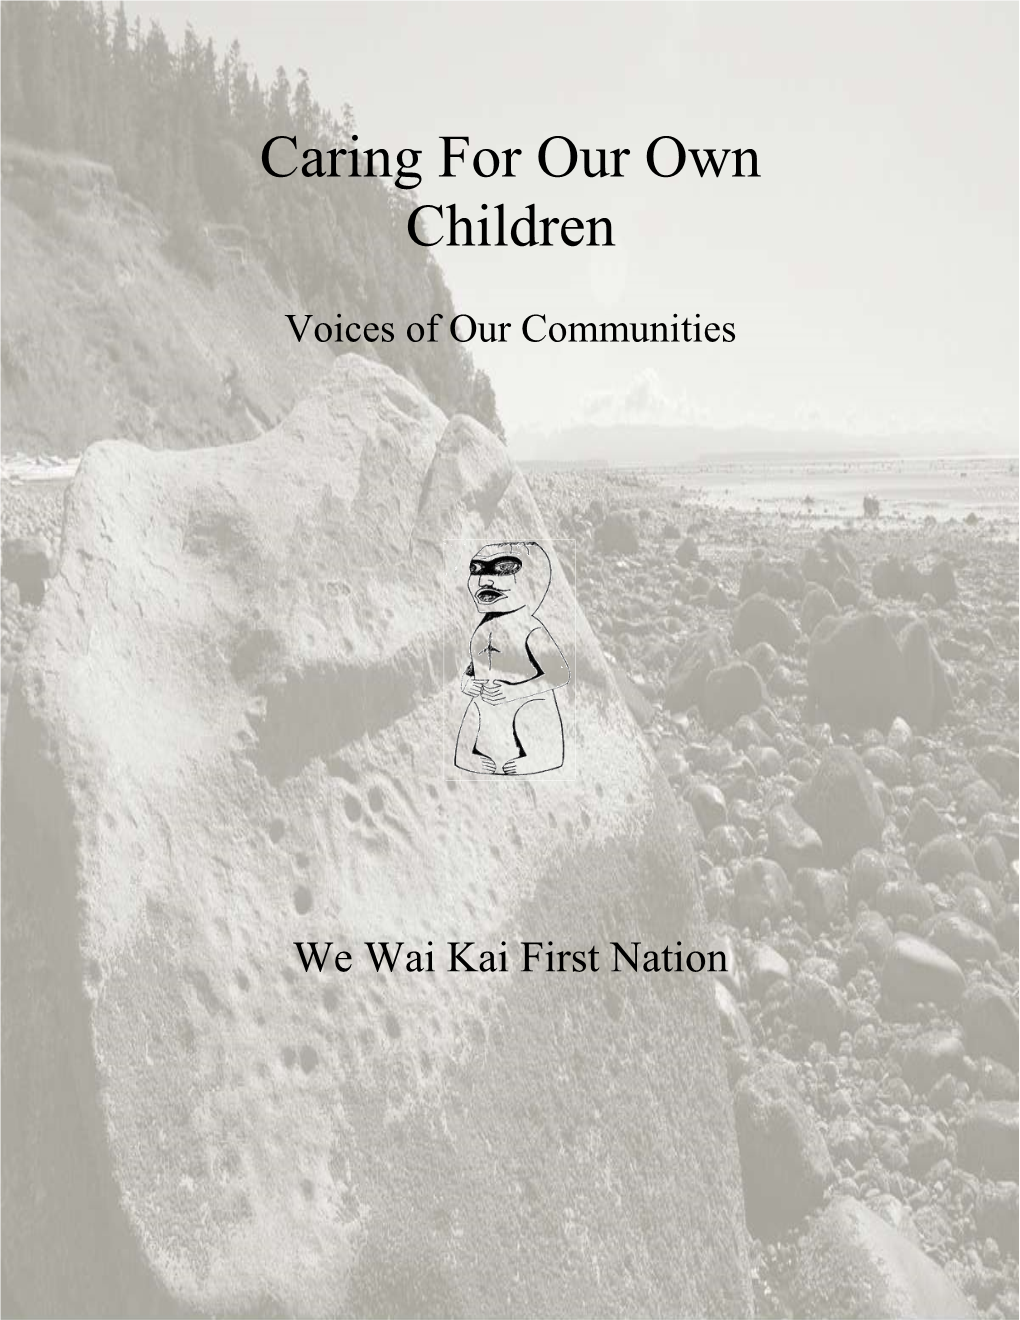 We Wai Kai First Nation